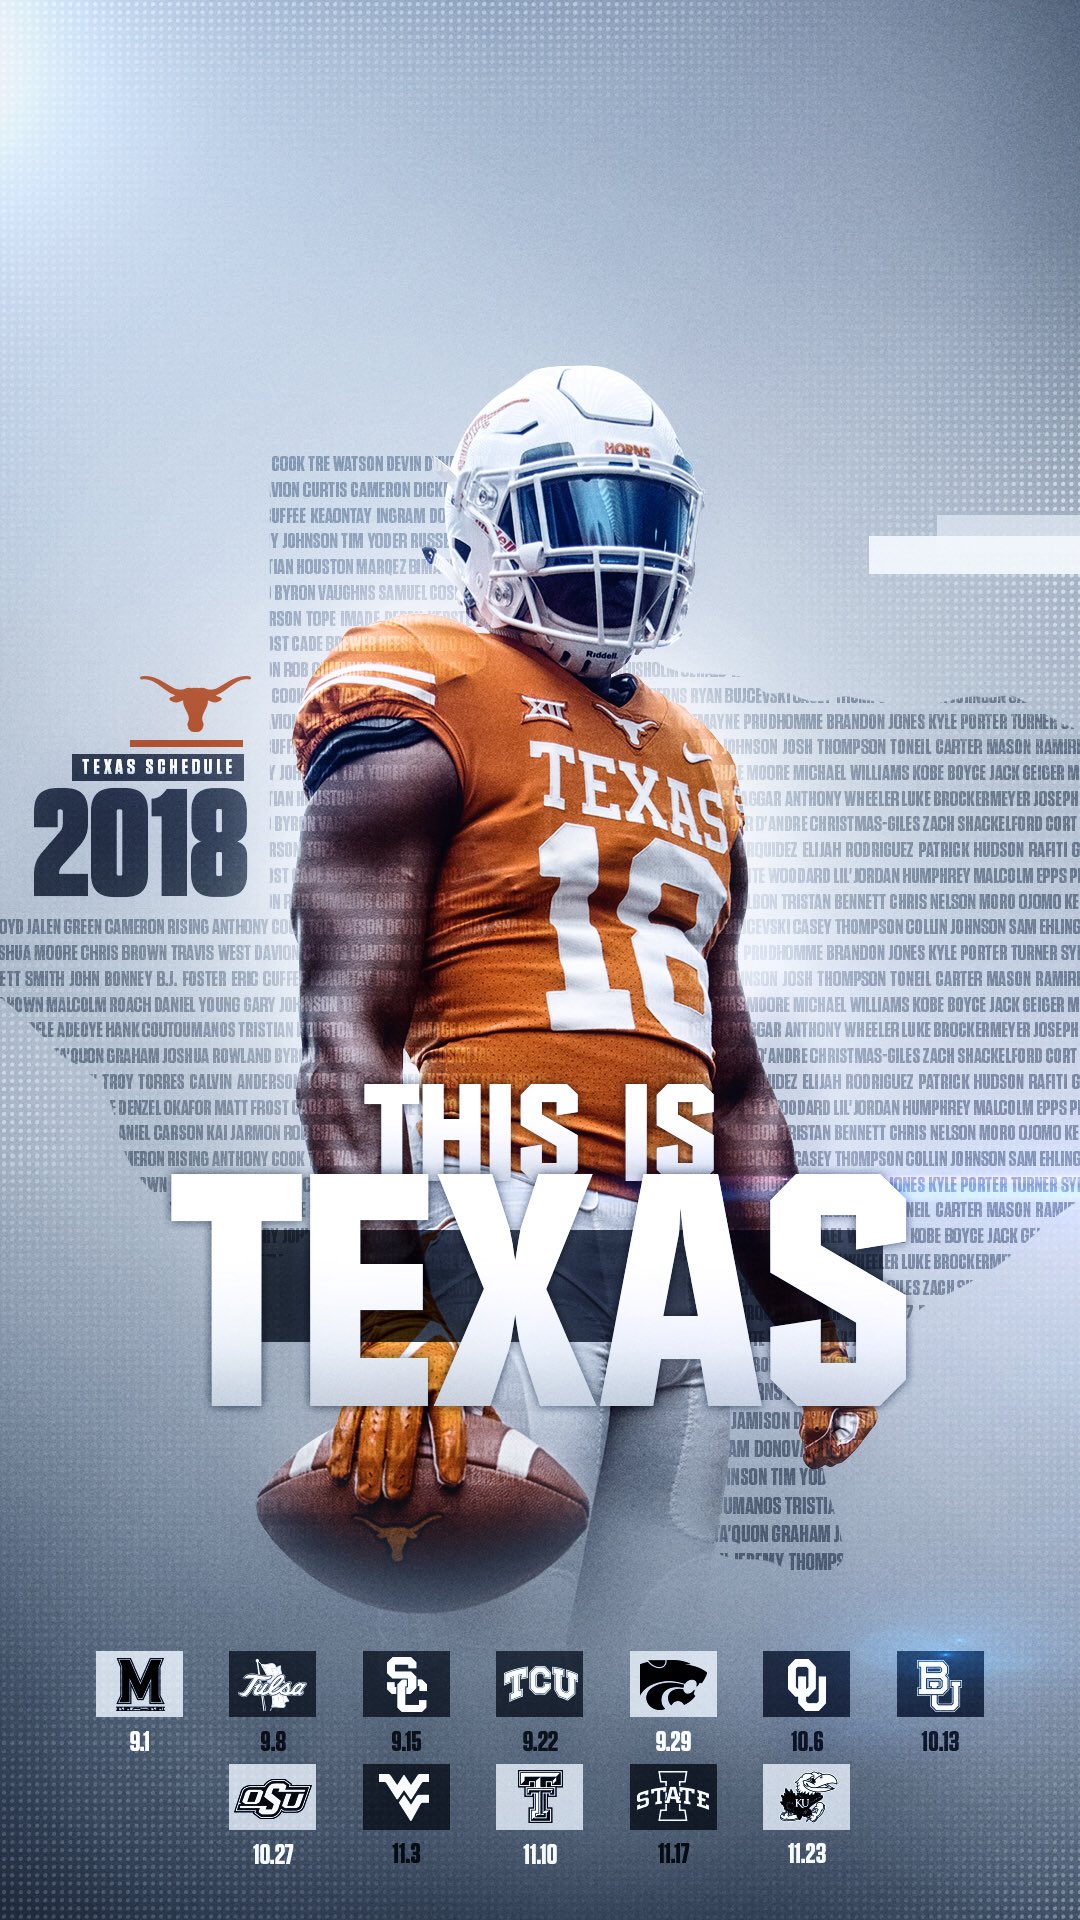 Texas Football on Twitter: "2018 Texas Football schedule wallpapers